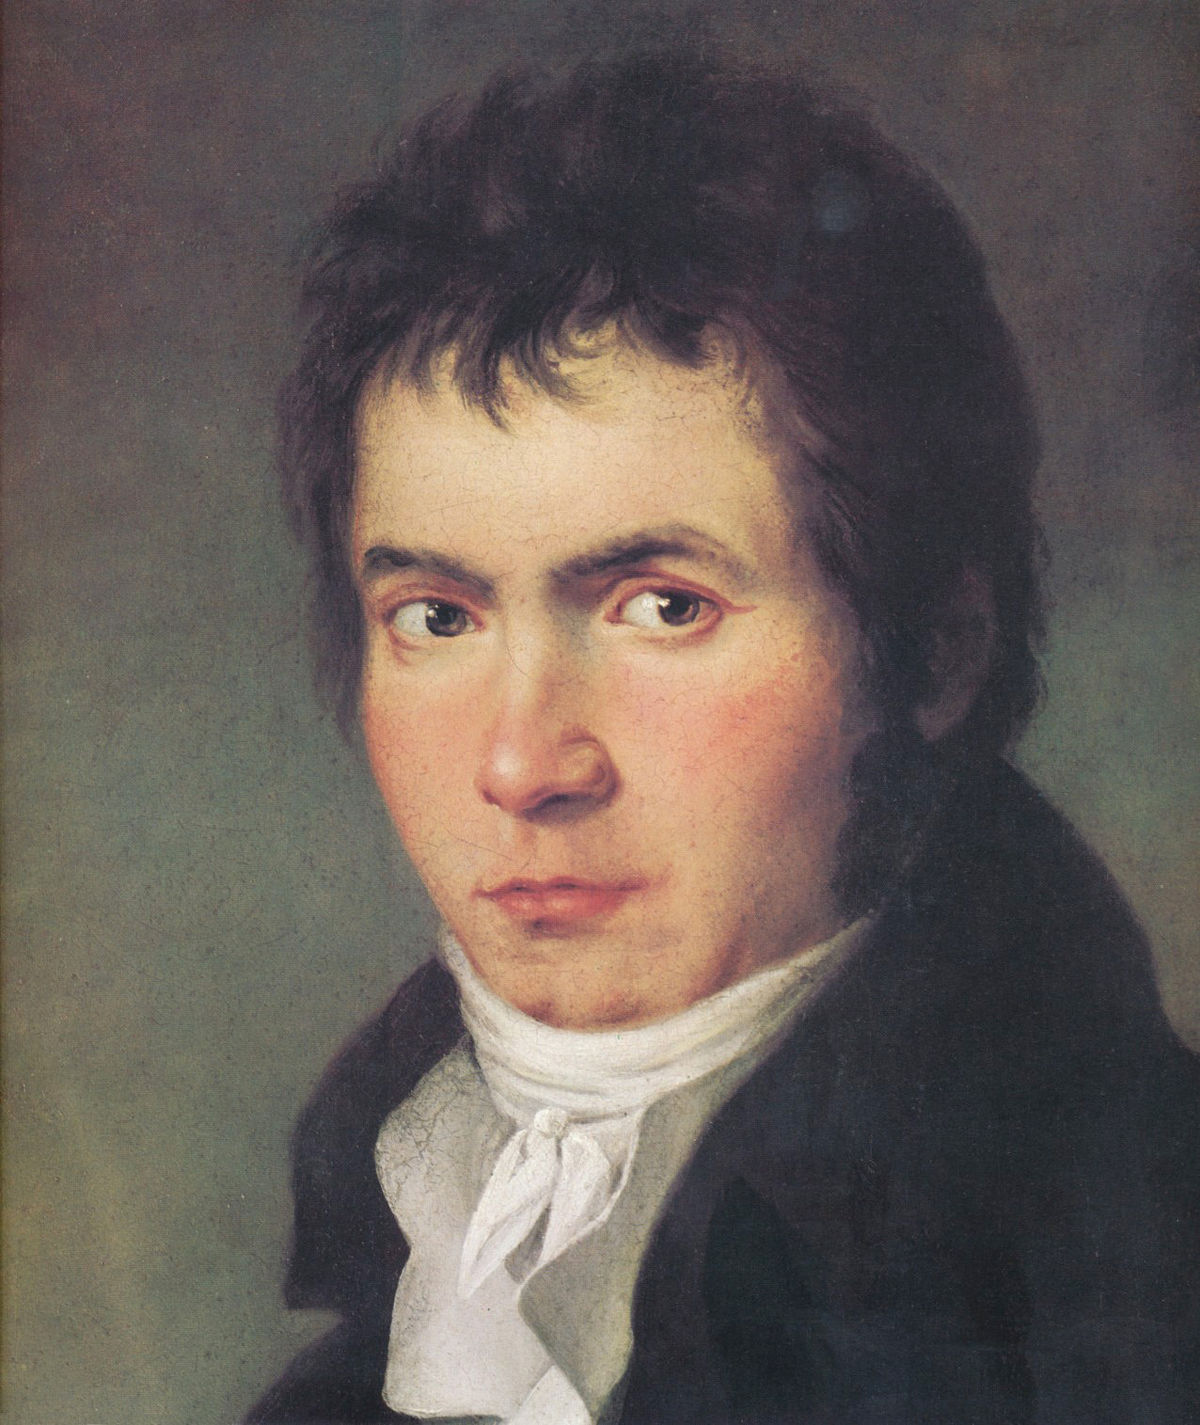 Moonlight Sonata karya Ludwig van Beethovenupload.wikimedia.org